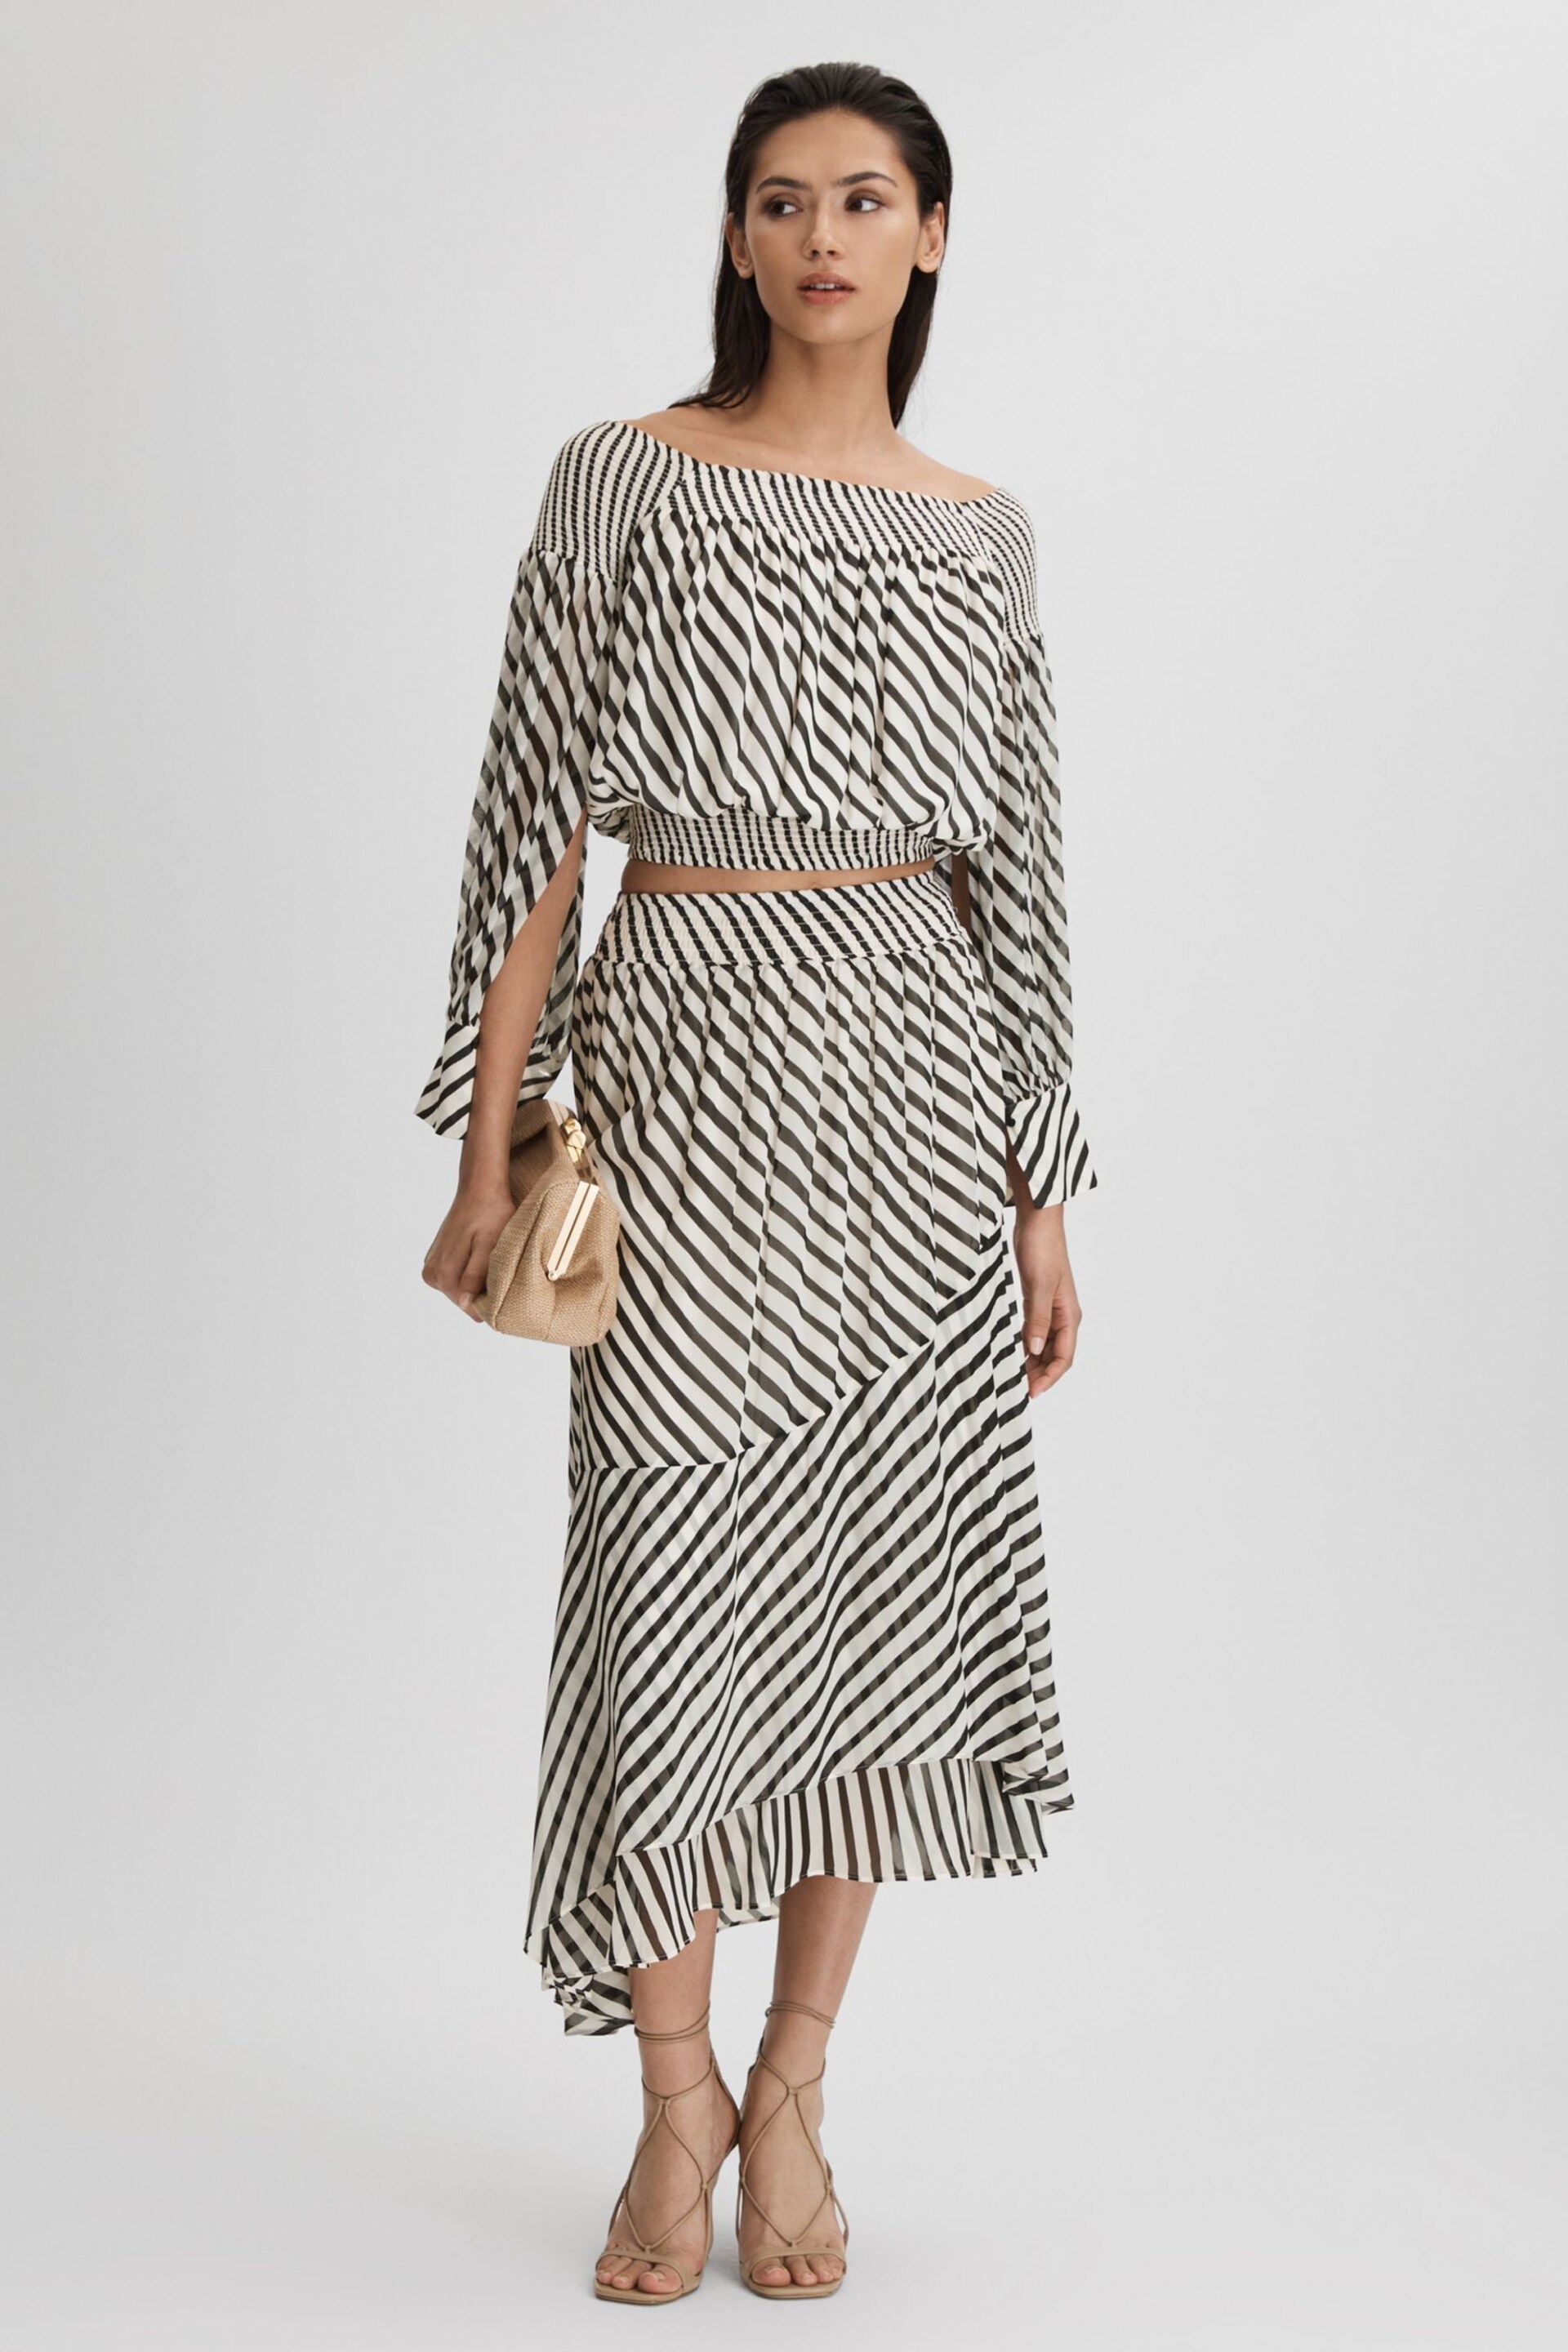 Reiss Black/Cream Dani Striped Panelled Midi Skirt - Image 1 of 4